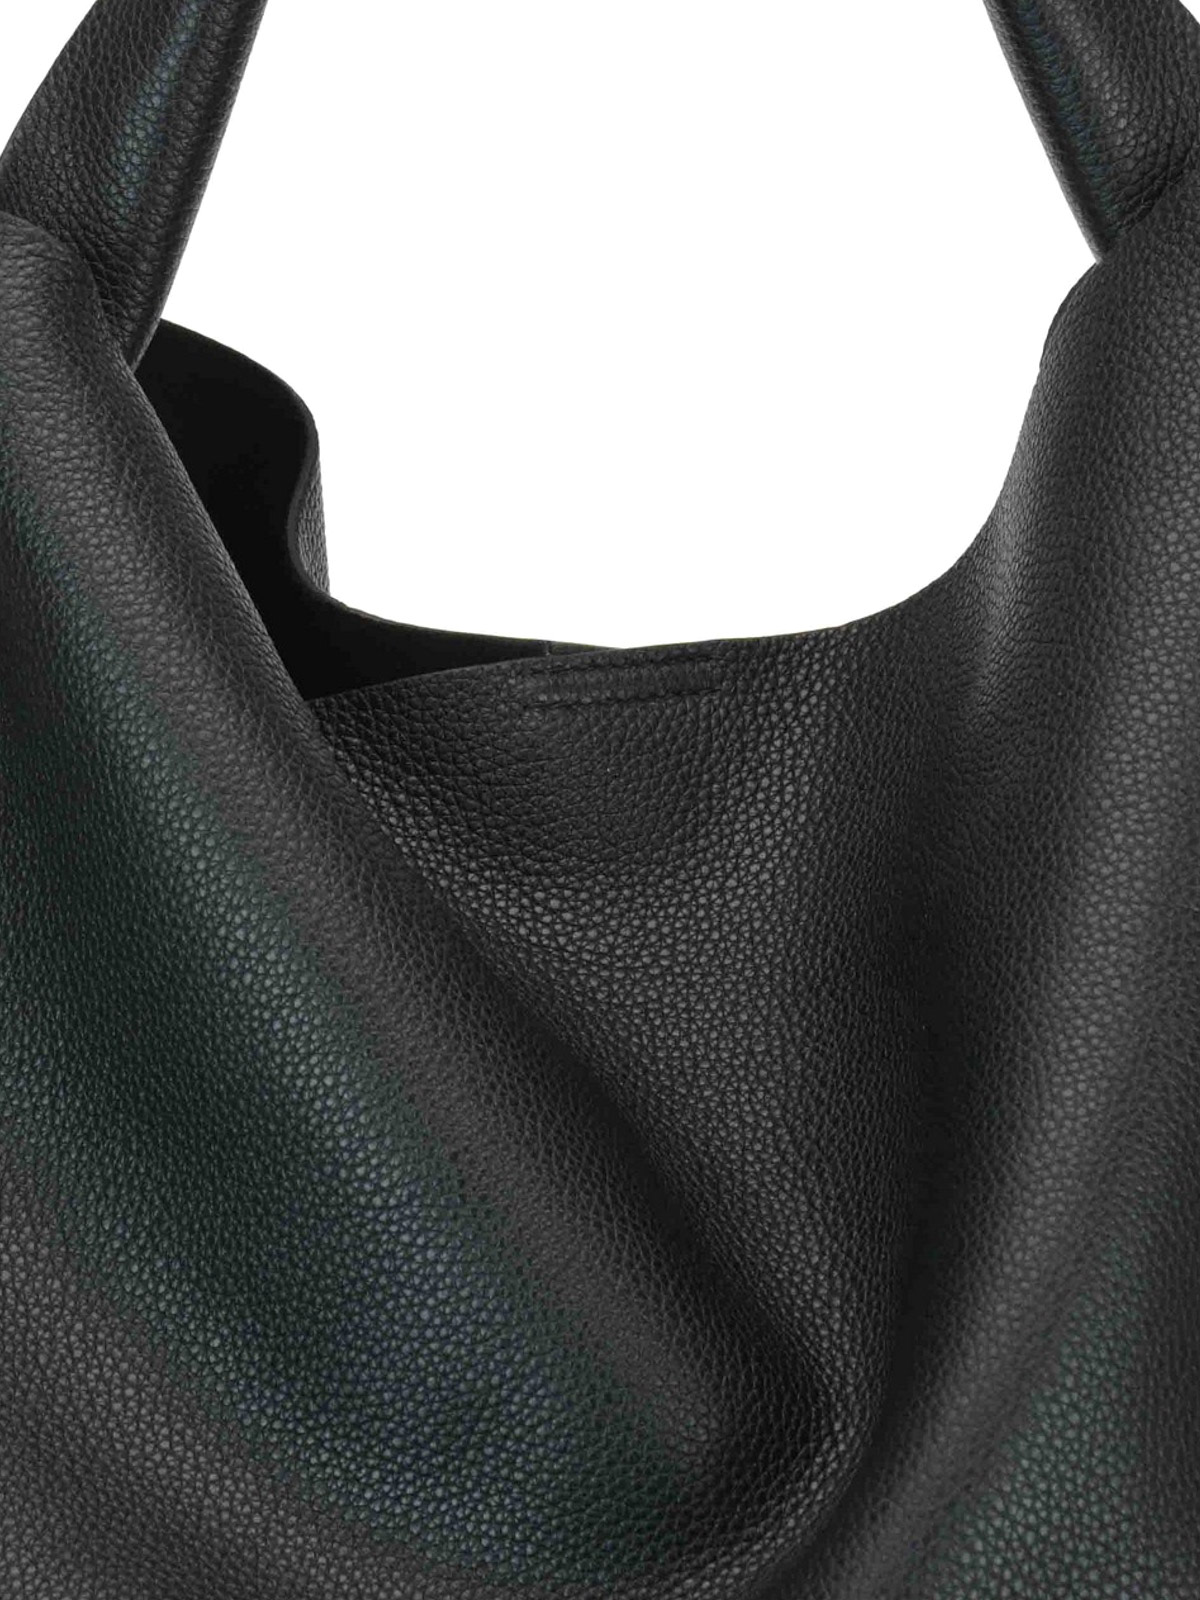 majoor Vruchtbaar speling Totes bags Jil Sander - Xiao grained leather tote bag -  JSPP850041WPB00026001